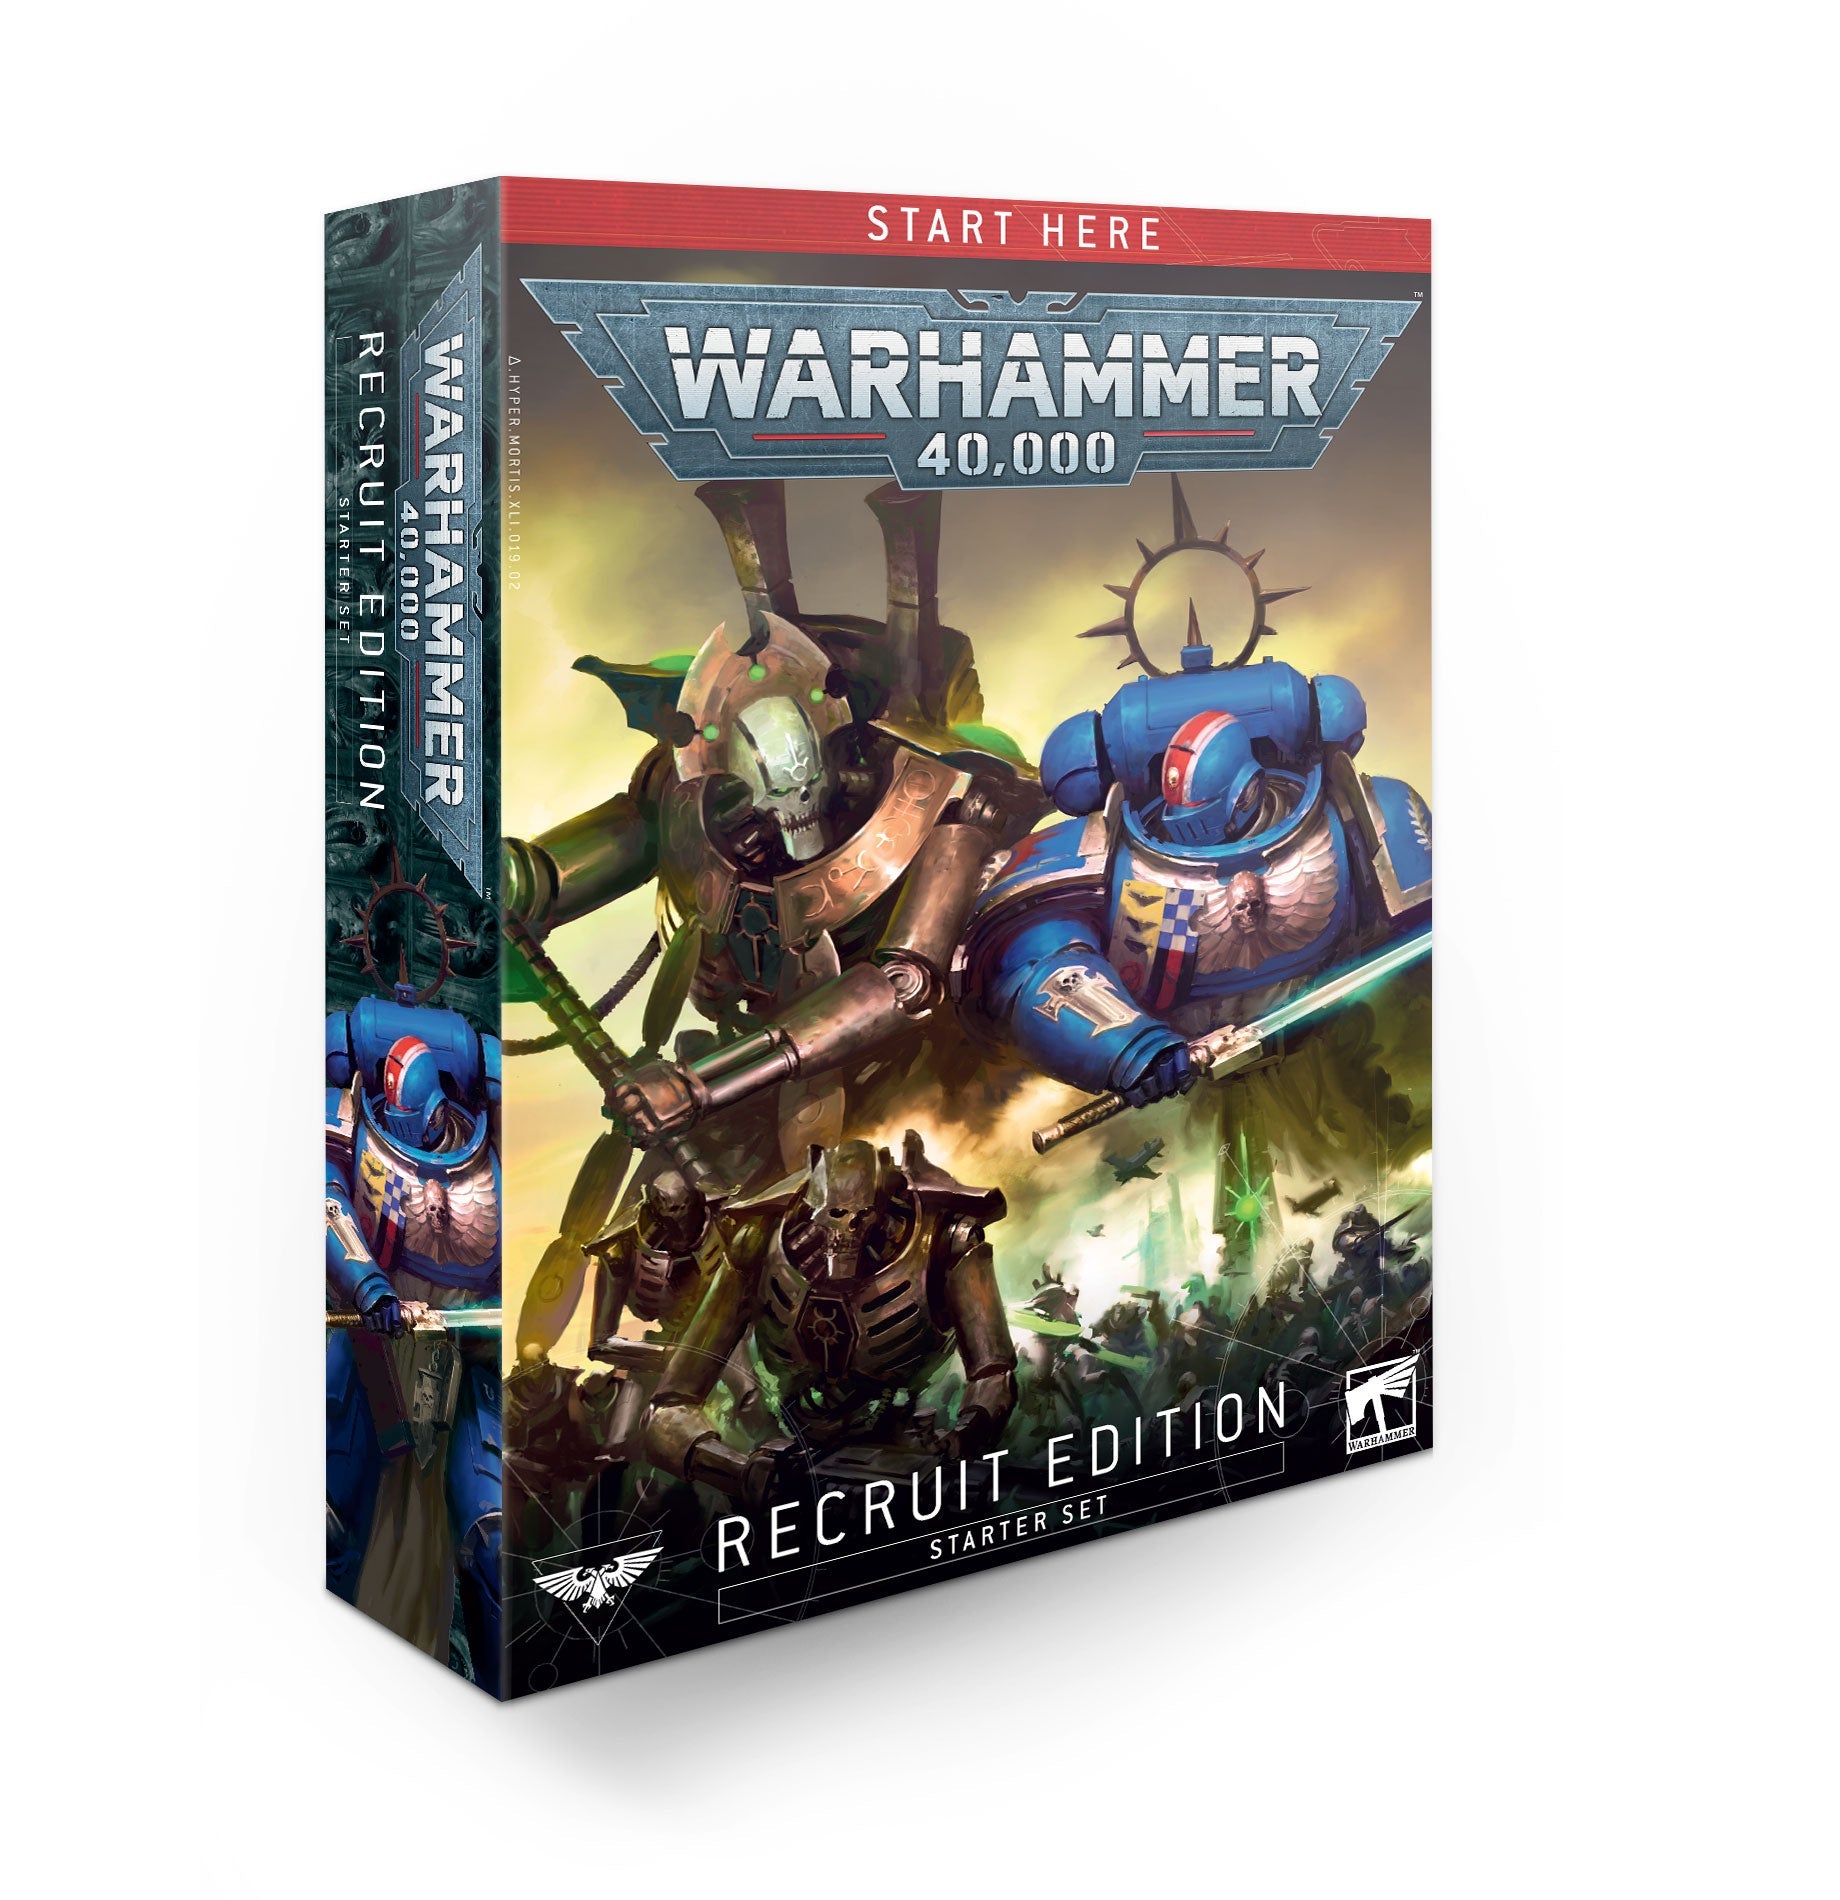 Warhammer 40,000 Recruit Edition Starter Set | Impulse Games and Hobbies